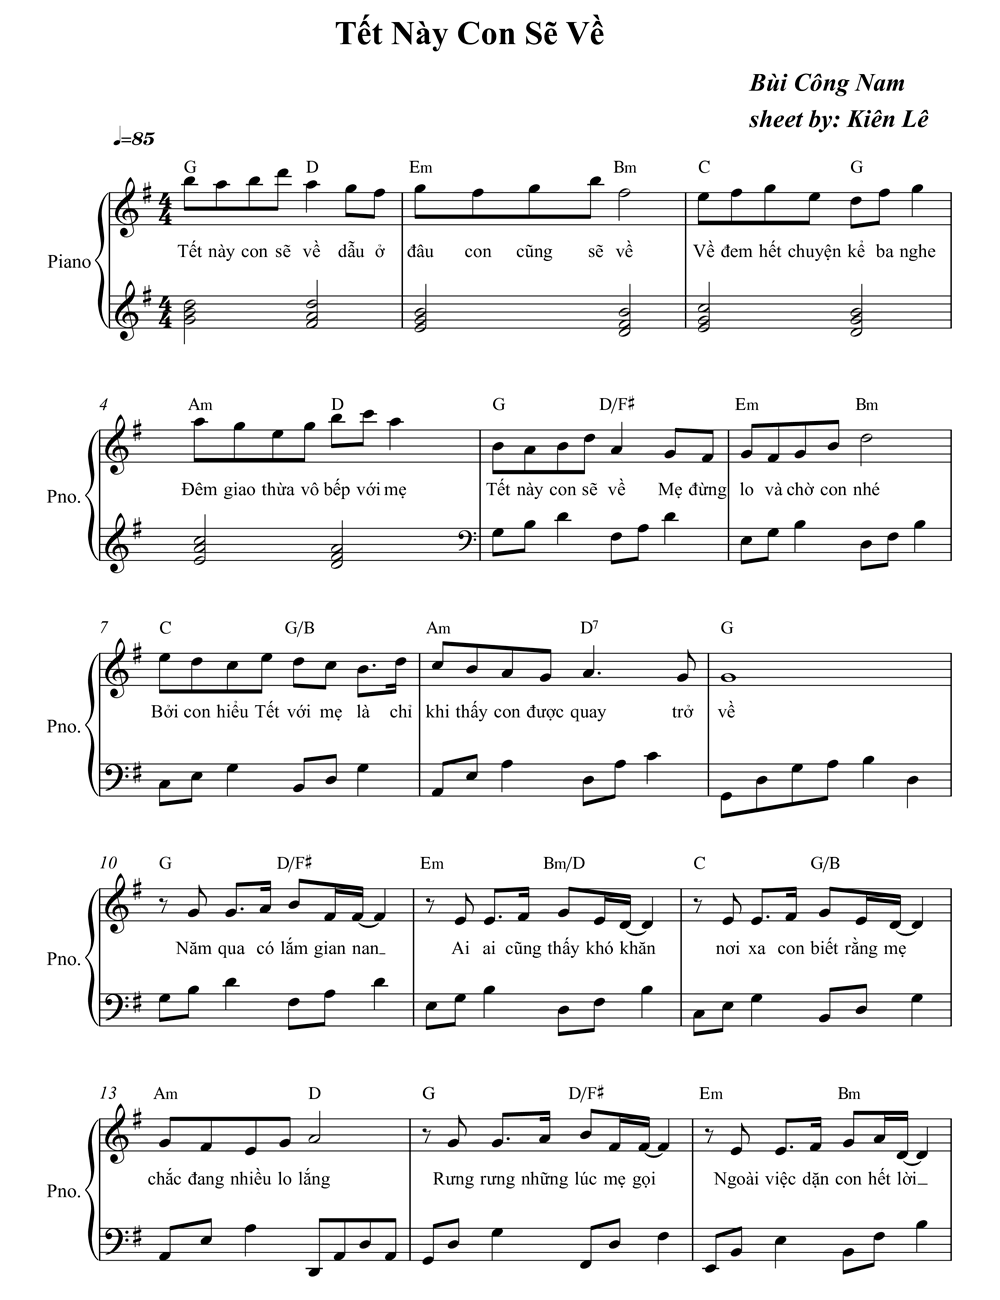 tet-nay-con-se-ve-sheet-piano-1